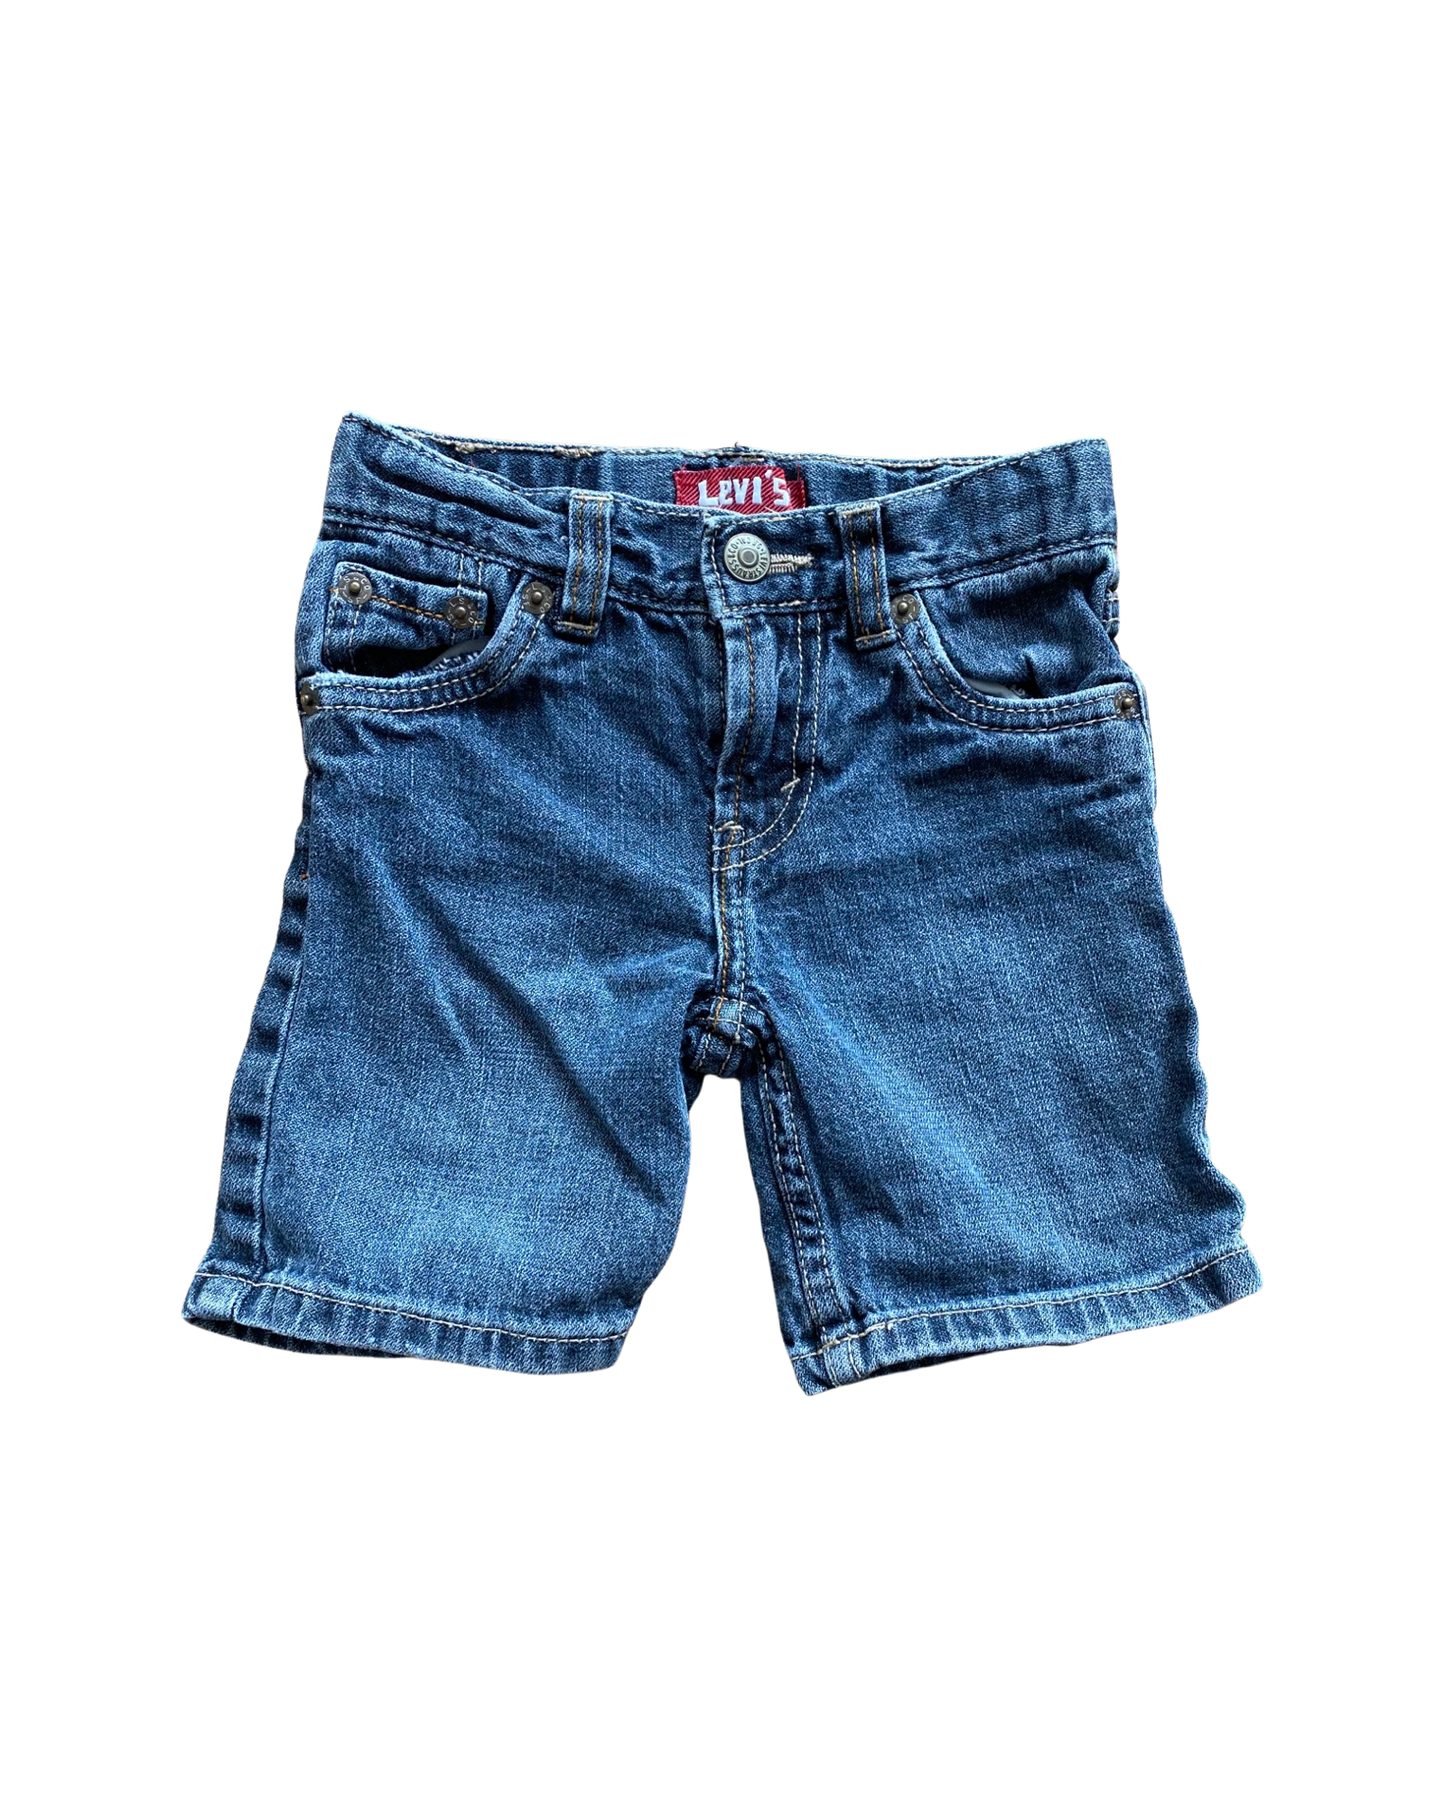 Levi's 549 dark vintage wash denim shorts (9-12mths)